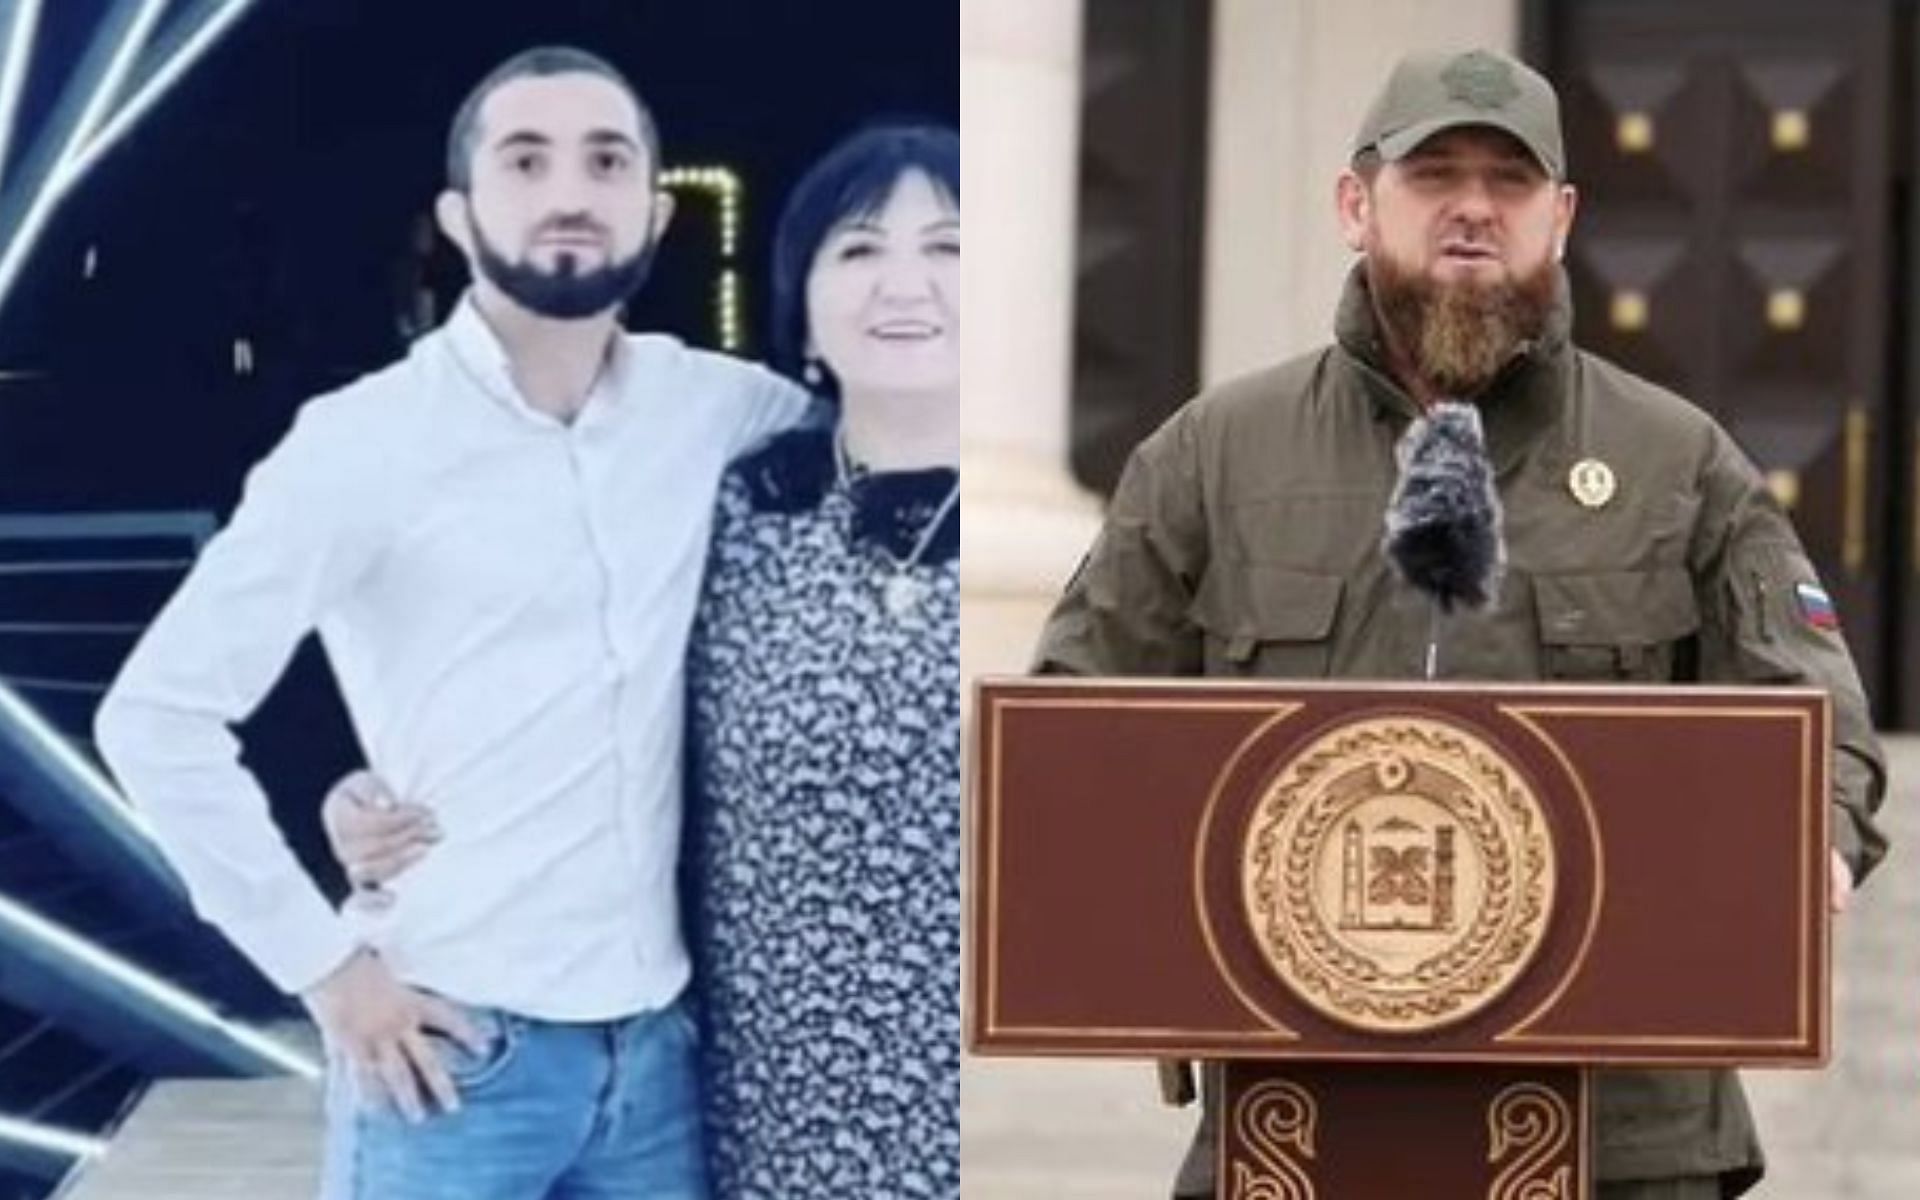 Goergiy Gagloev (left) and Ramzan Kadyrov (right) (Image credits @ZidanSports on Twitter)